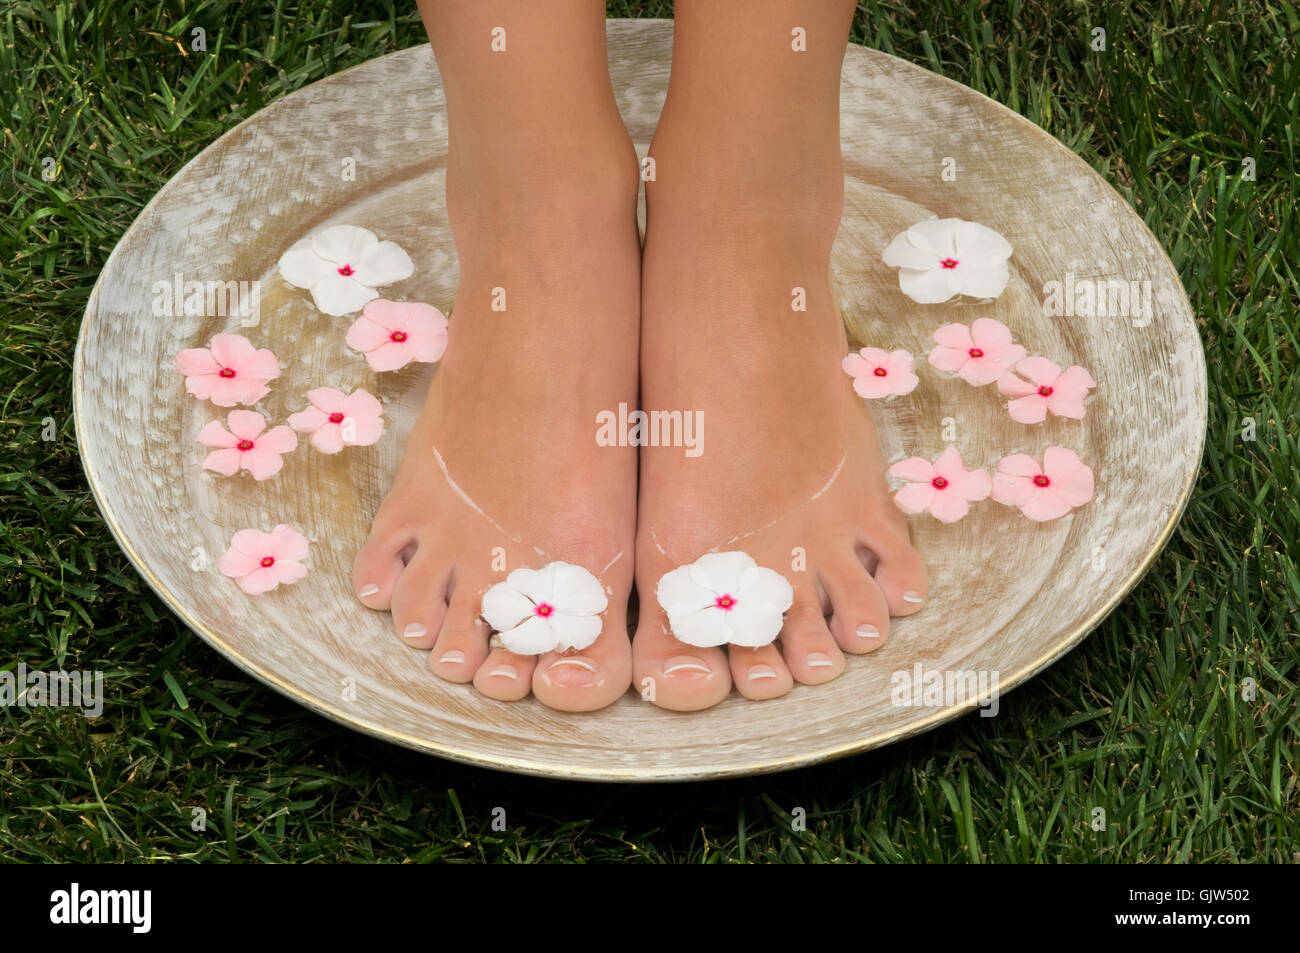 foot massage bathing resort Stock Photo